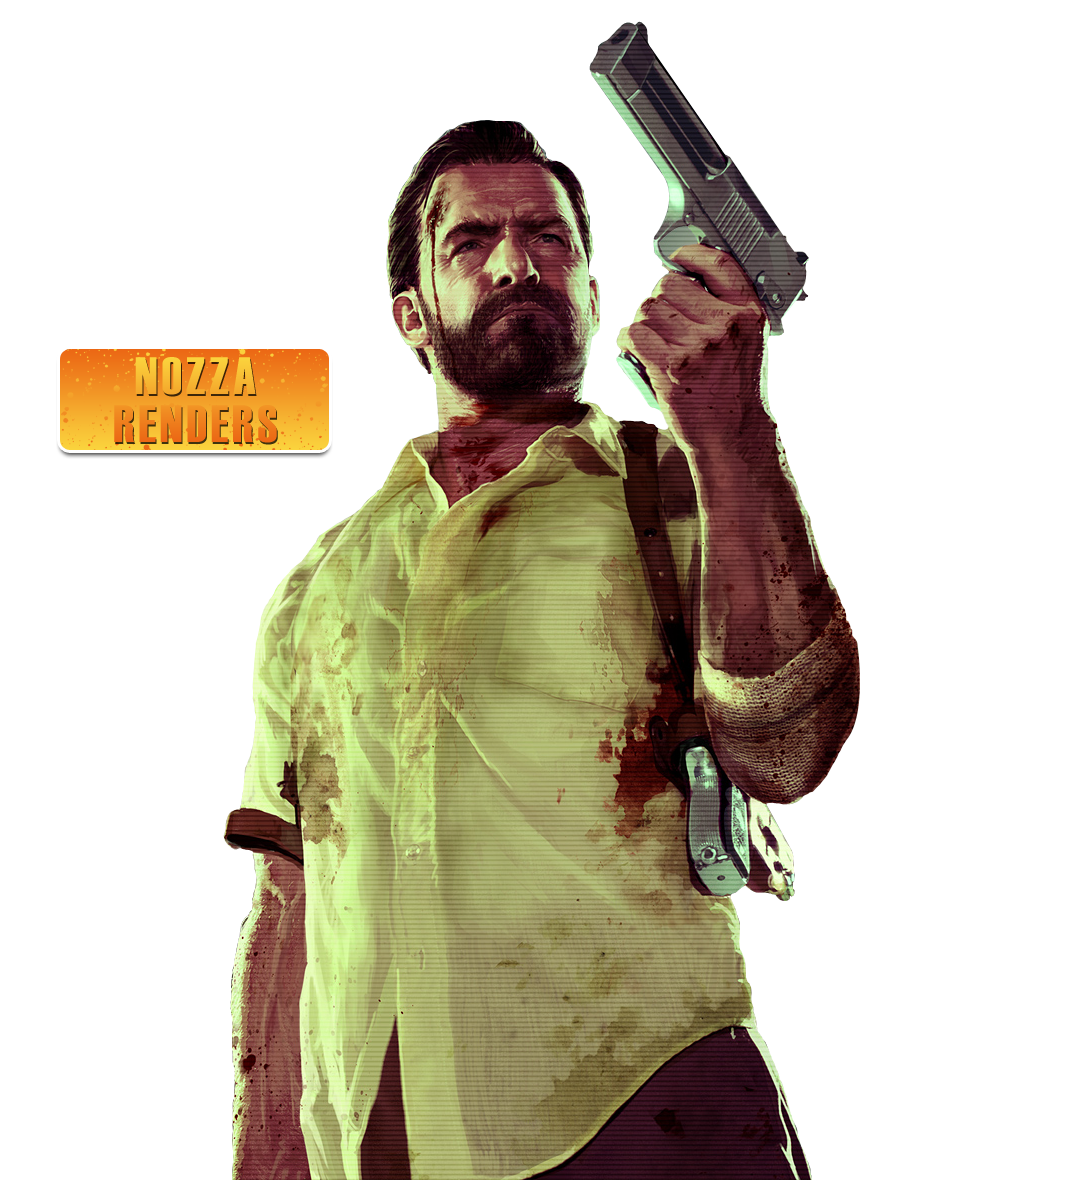 Max Payne 3 464 X 720 283.png